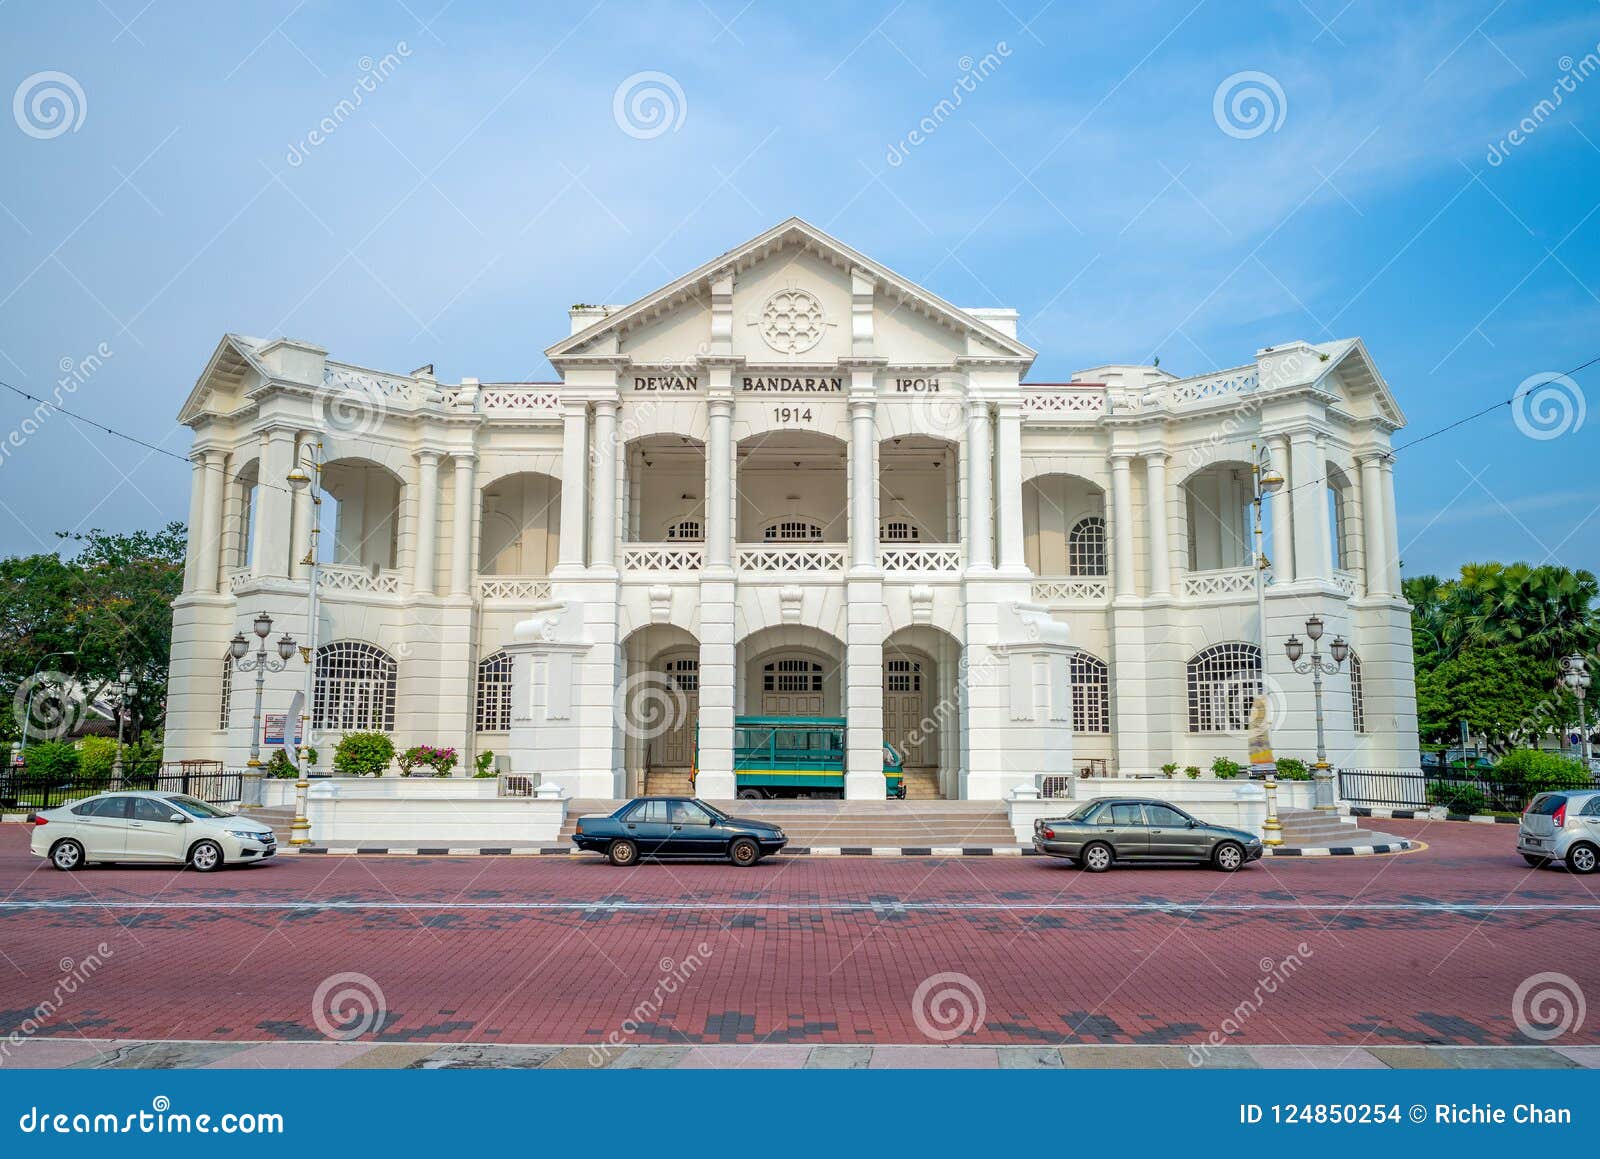 Dewan Bandaran Ipoh, Ipoh Town Hall Stock Photo - Image of historical